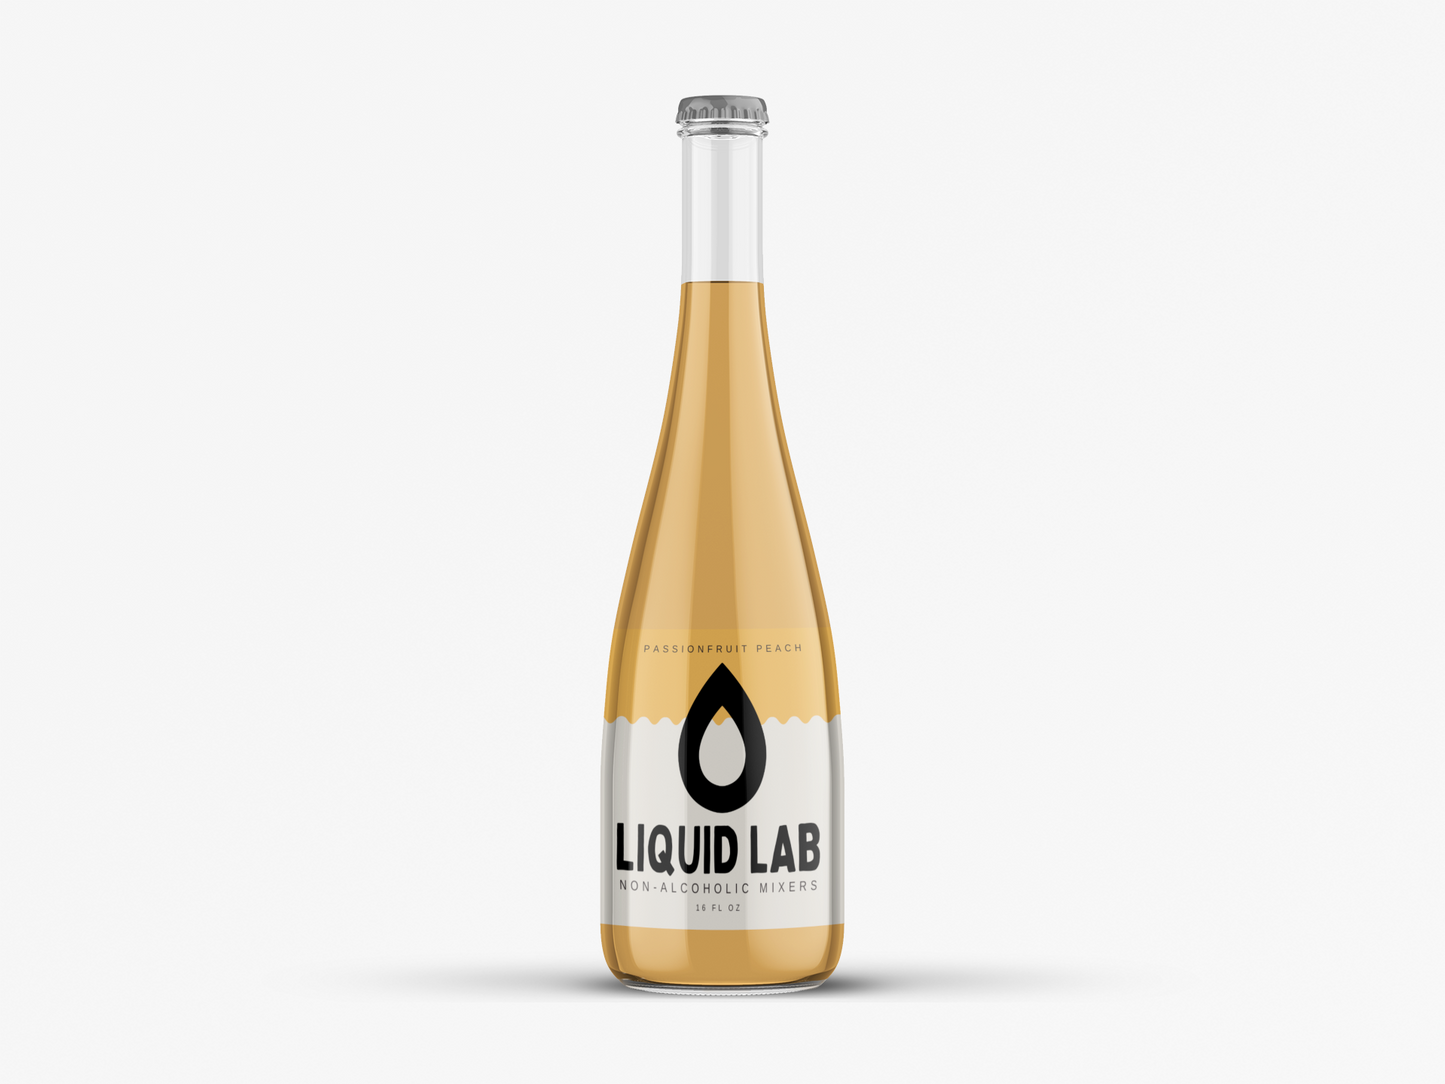 Liquid Lab Non Alcoholic Mixers 16 FL OZ